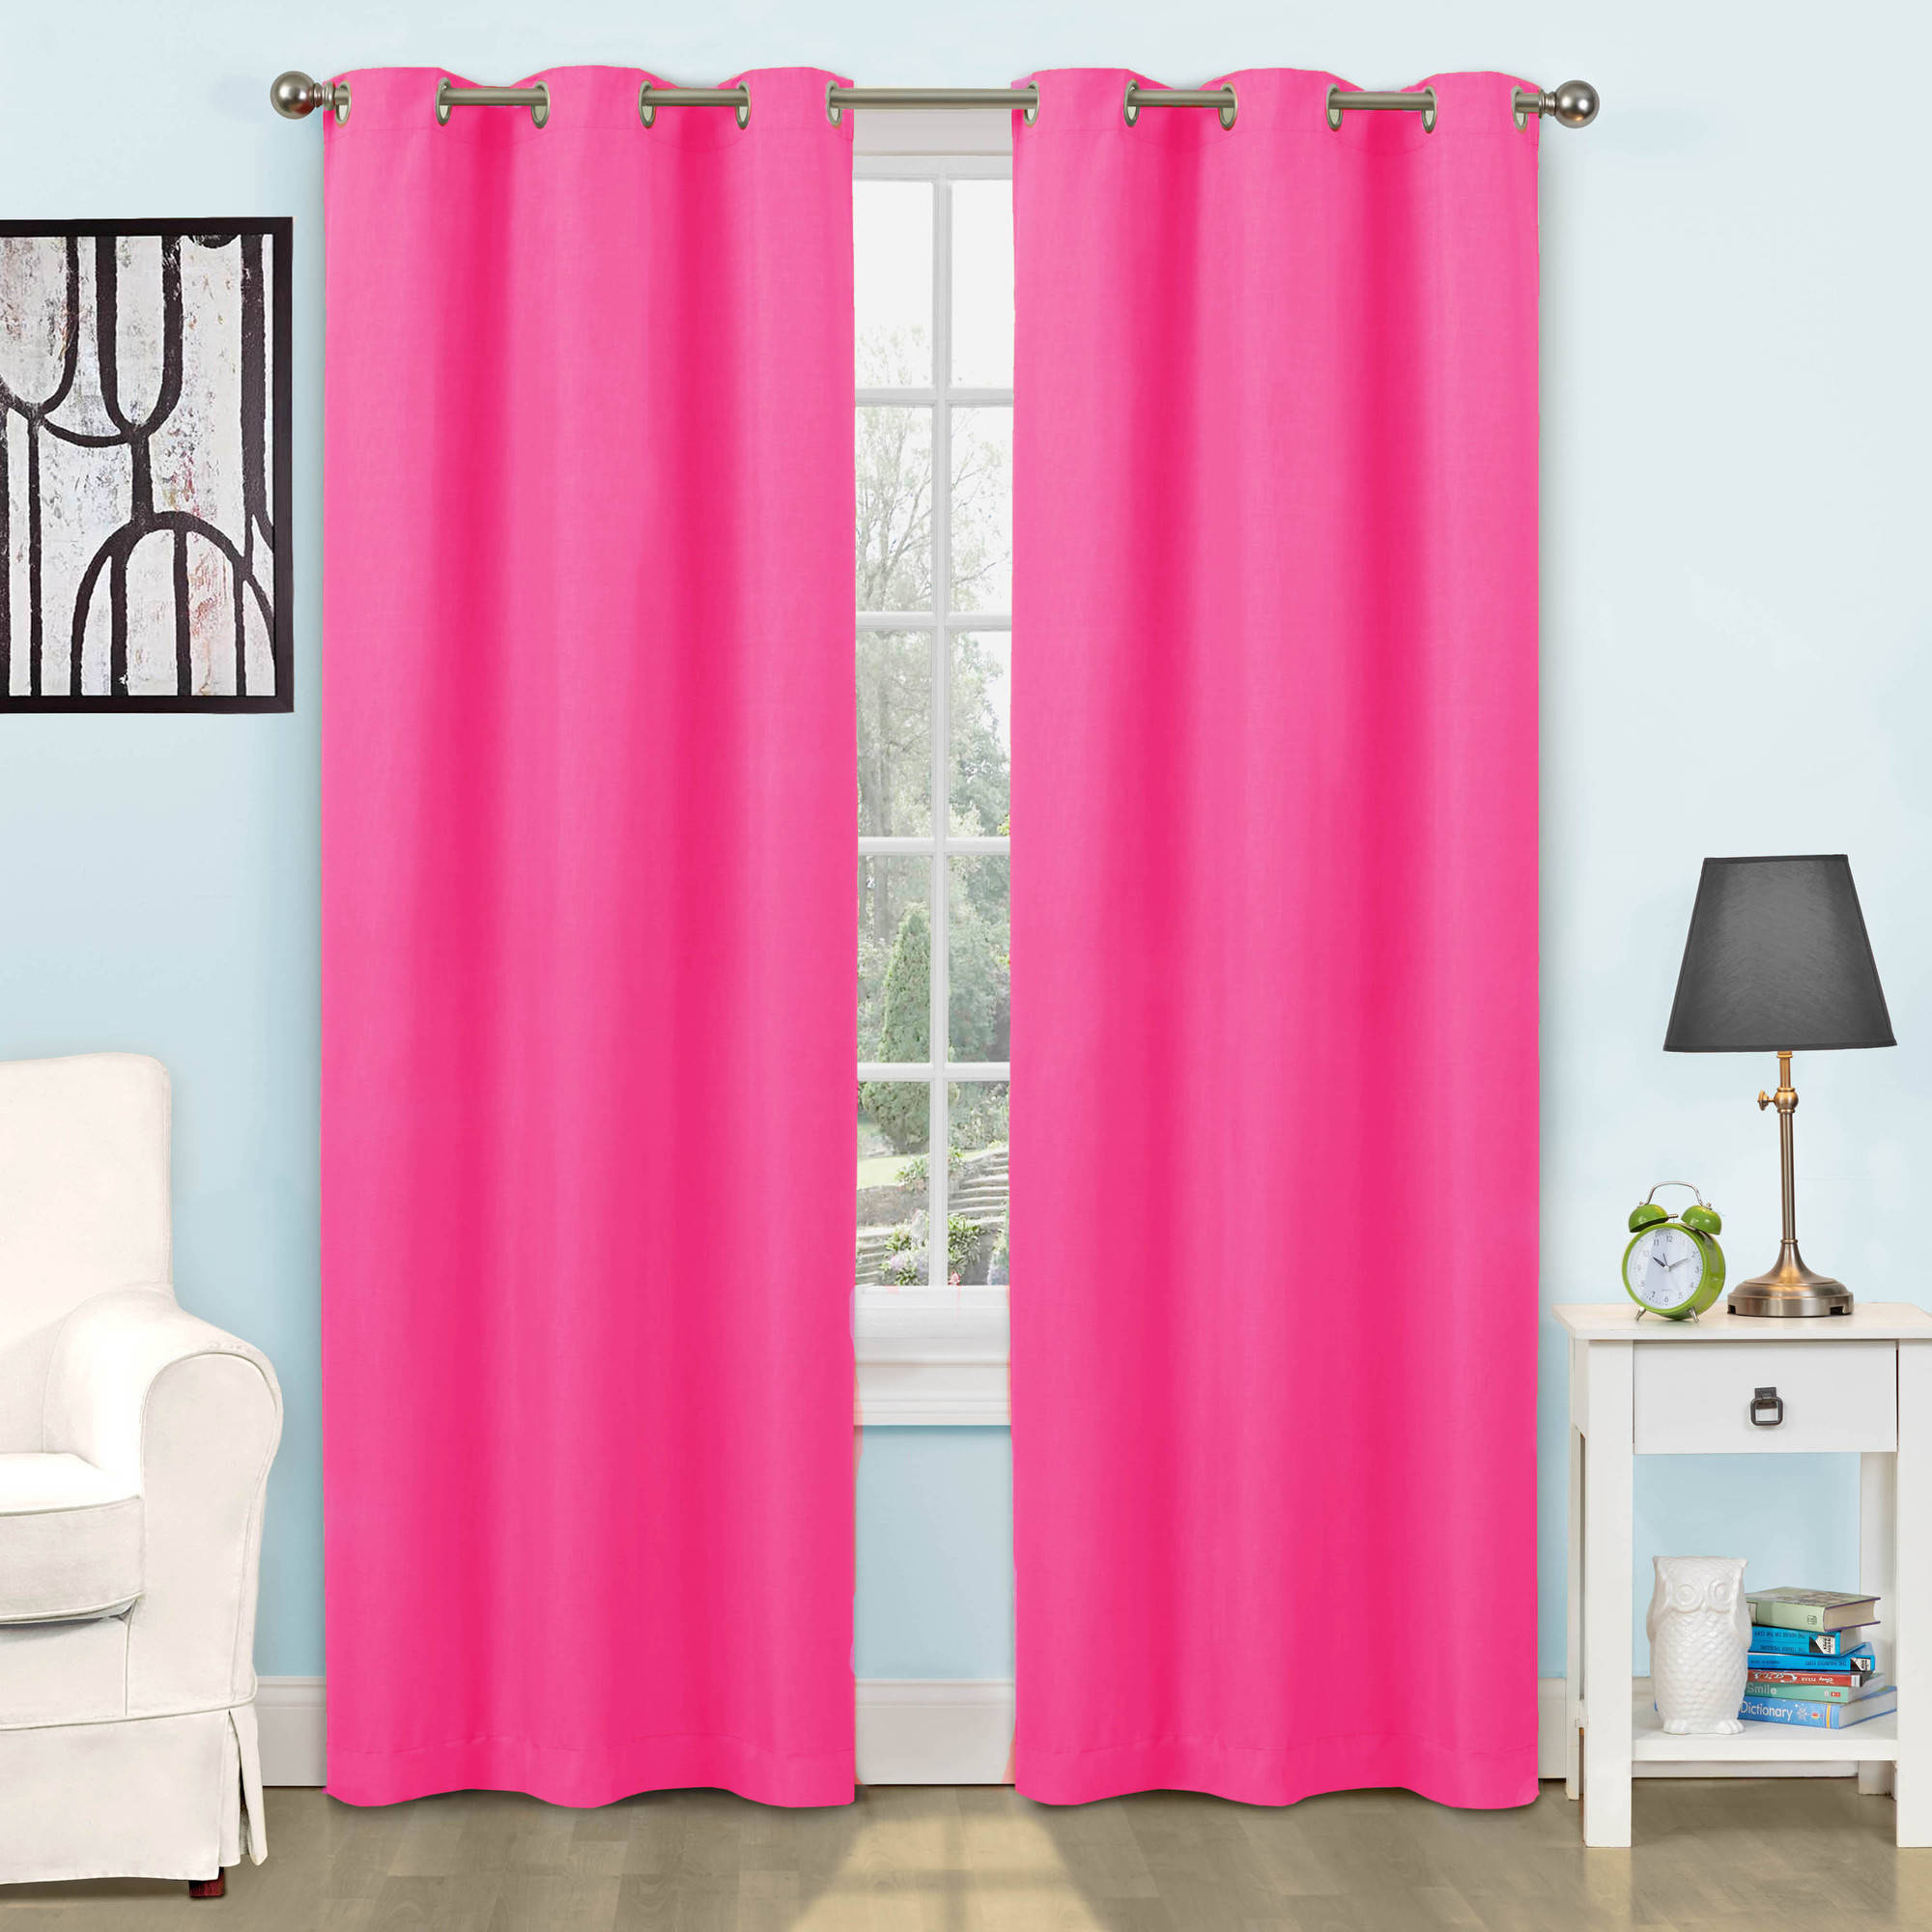 Choose Kids Bedroom Curtains In A Jiffy